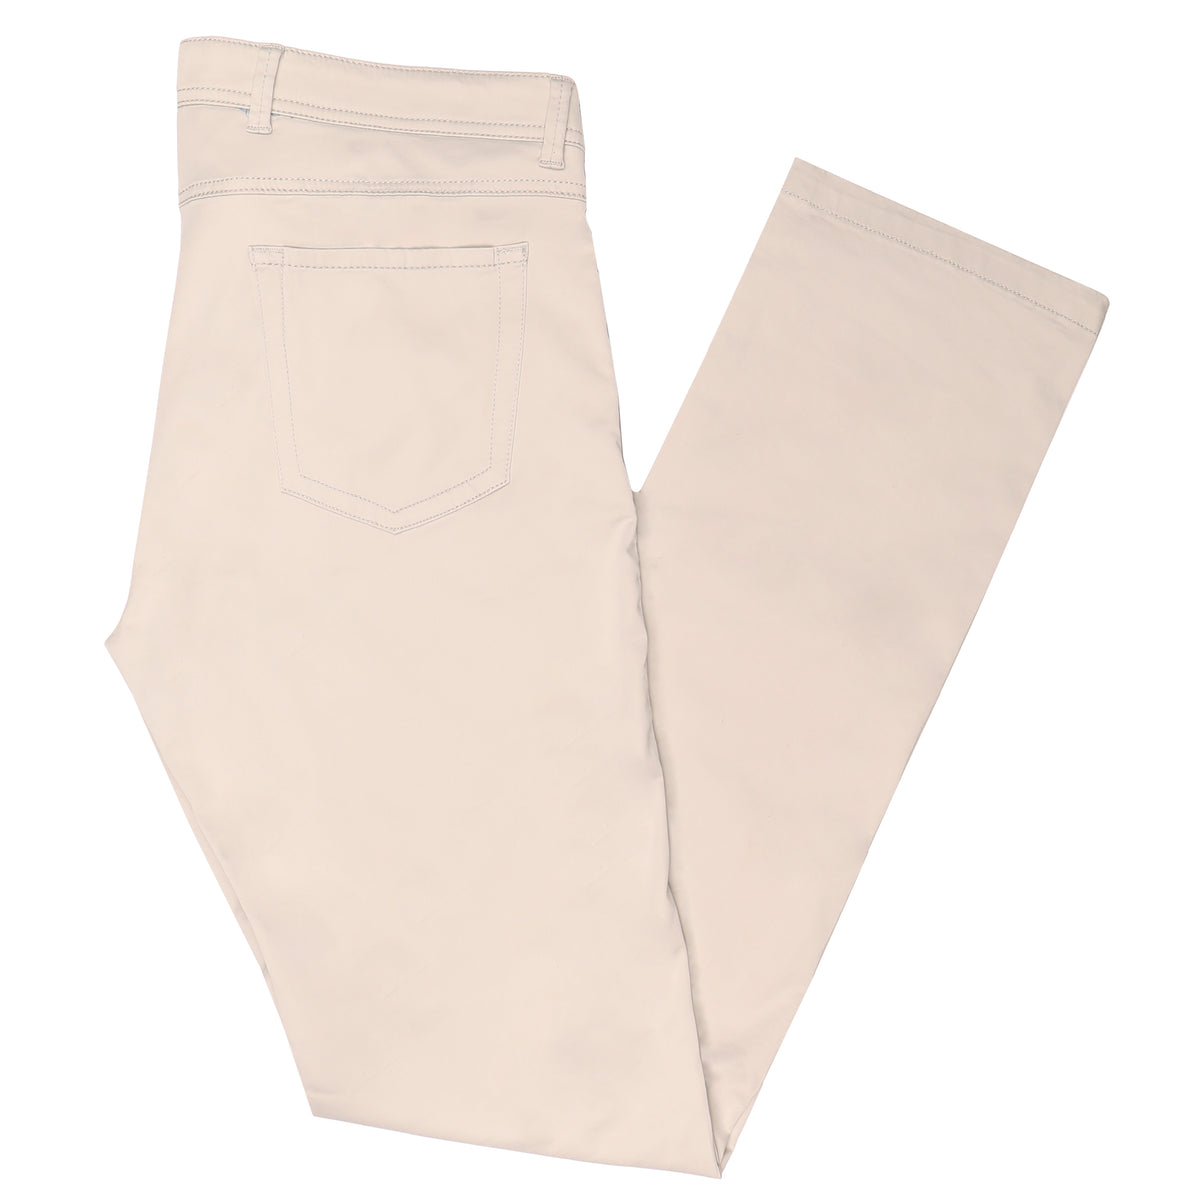 *** FINAL SALE *** Crescent Comfort Ultra Soft Stretch 5-Pocket Pant - Khaki